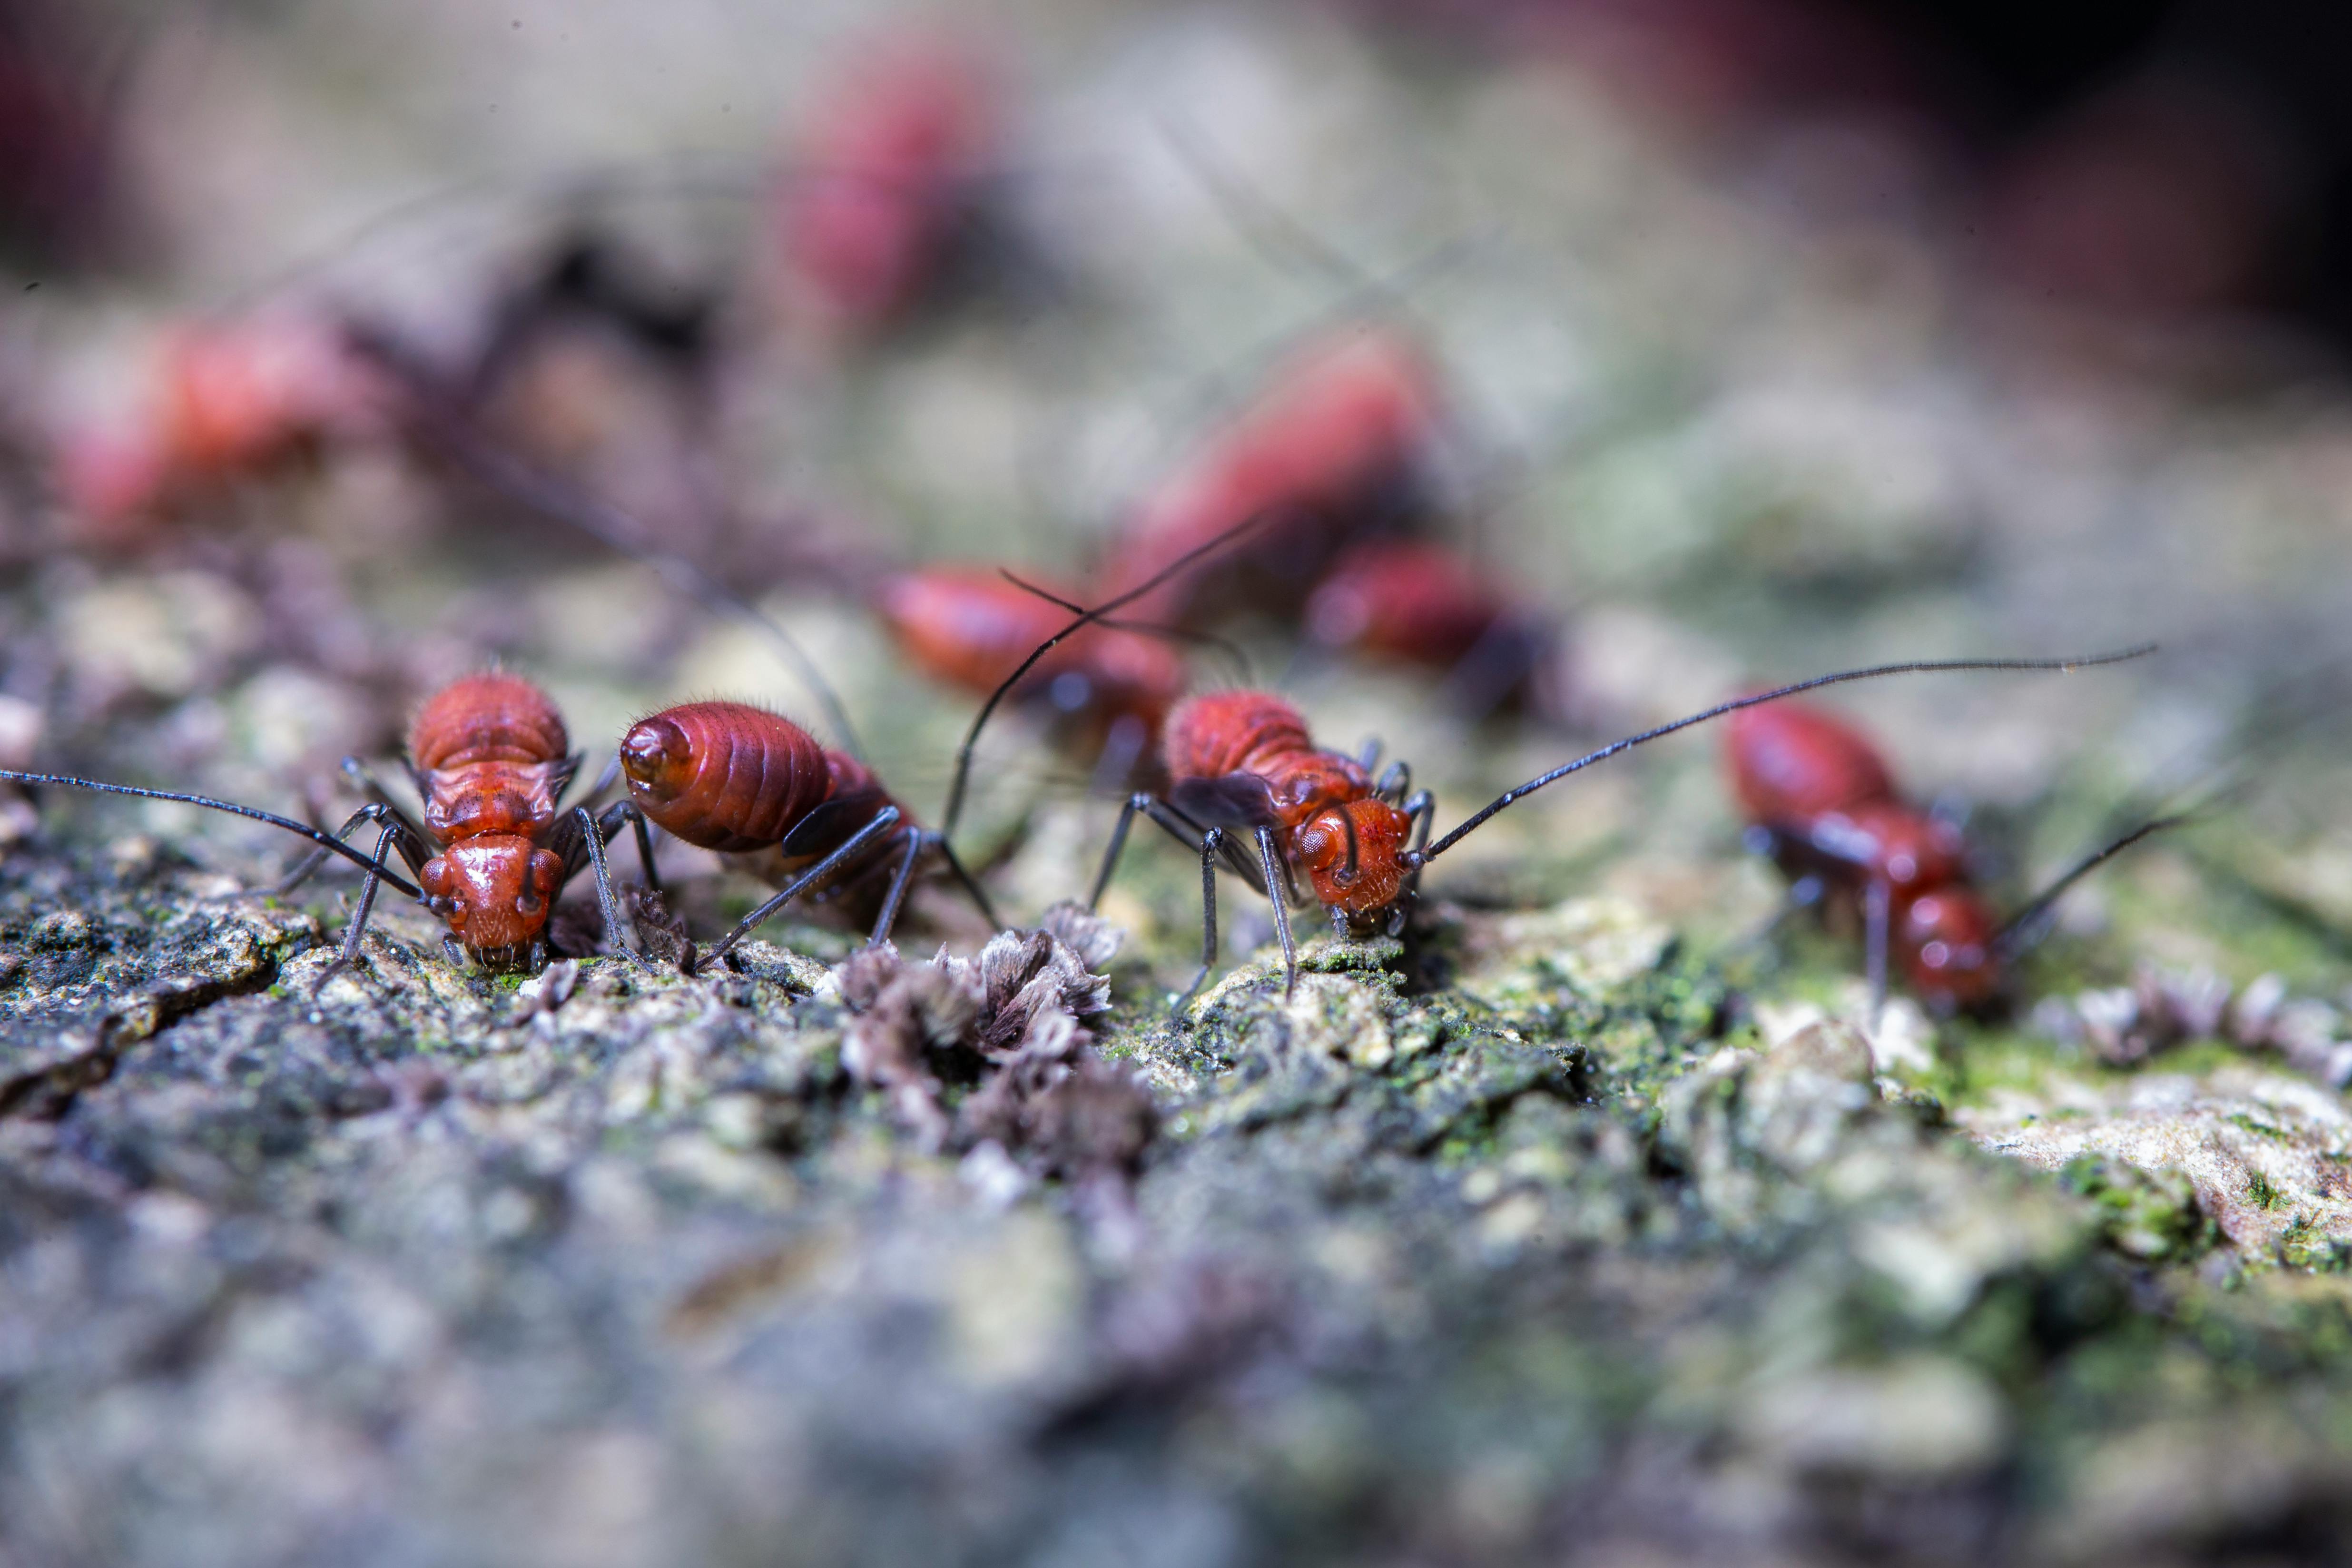 Ant Control Experts in Cedar Park, TX